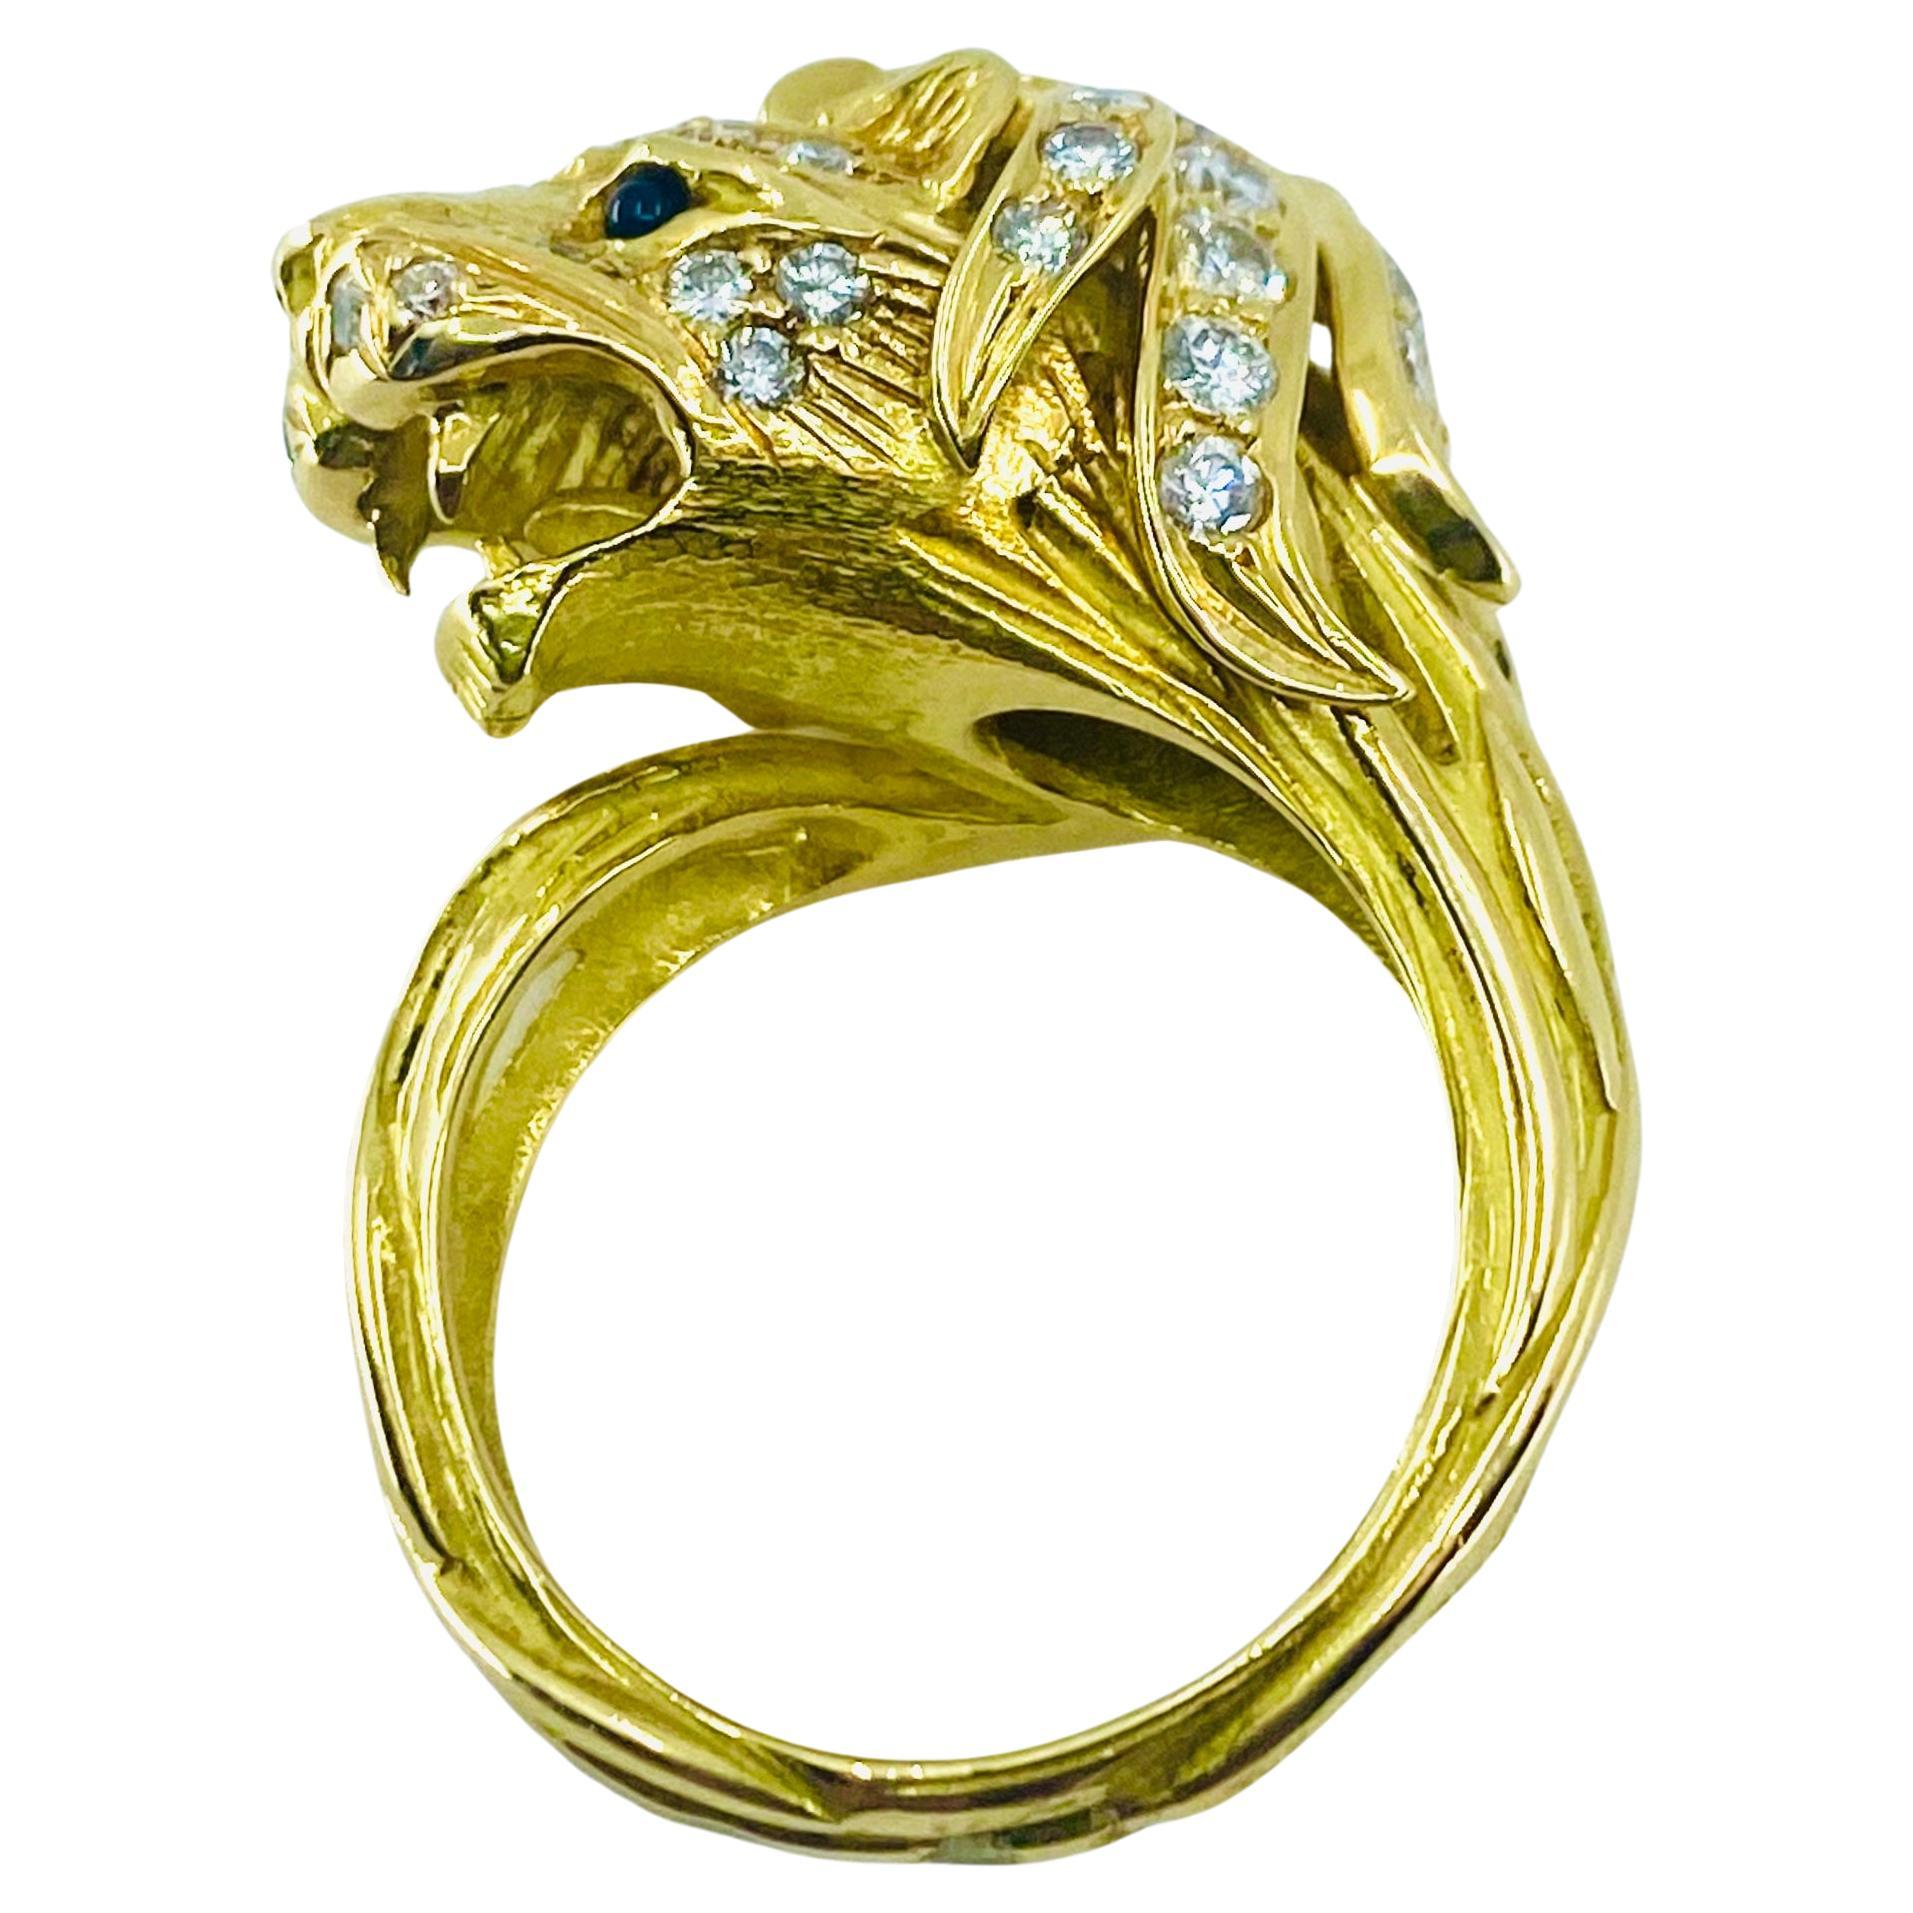 J.P. Bellin Leo Ring 18k Gold Gemstones 2